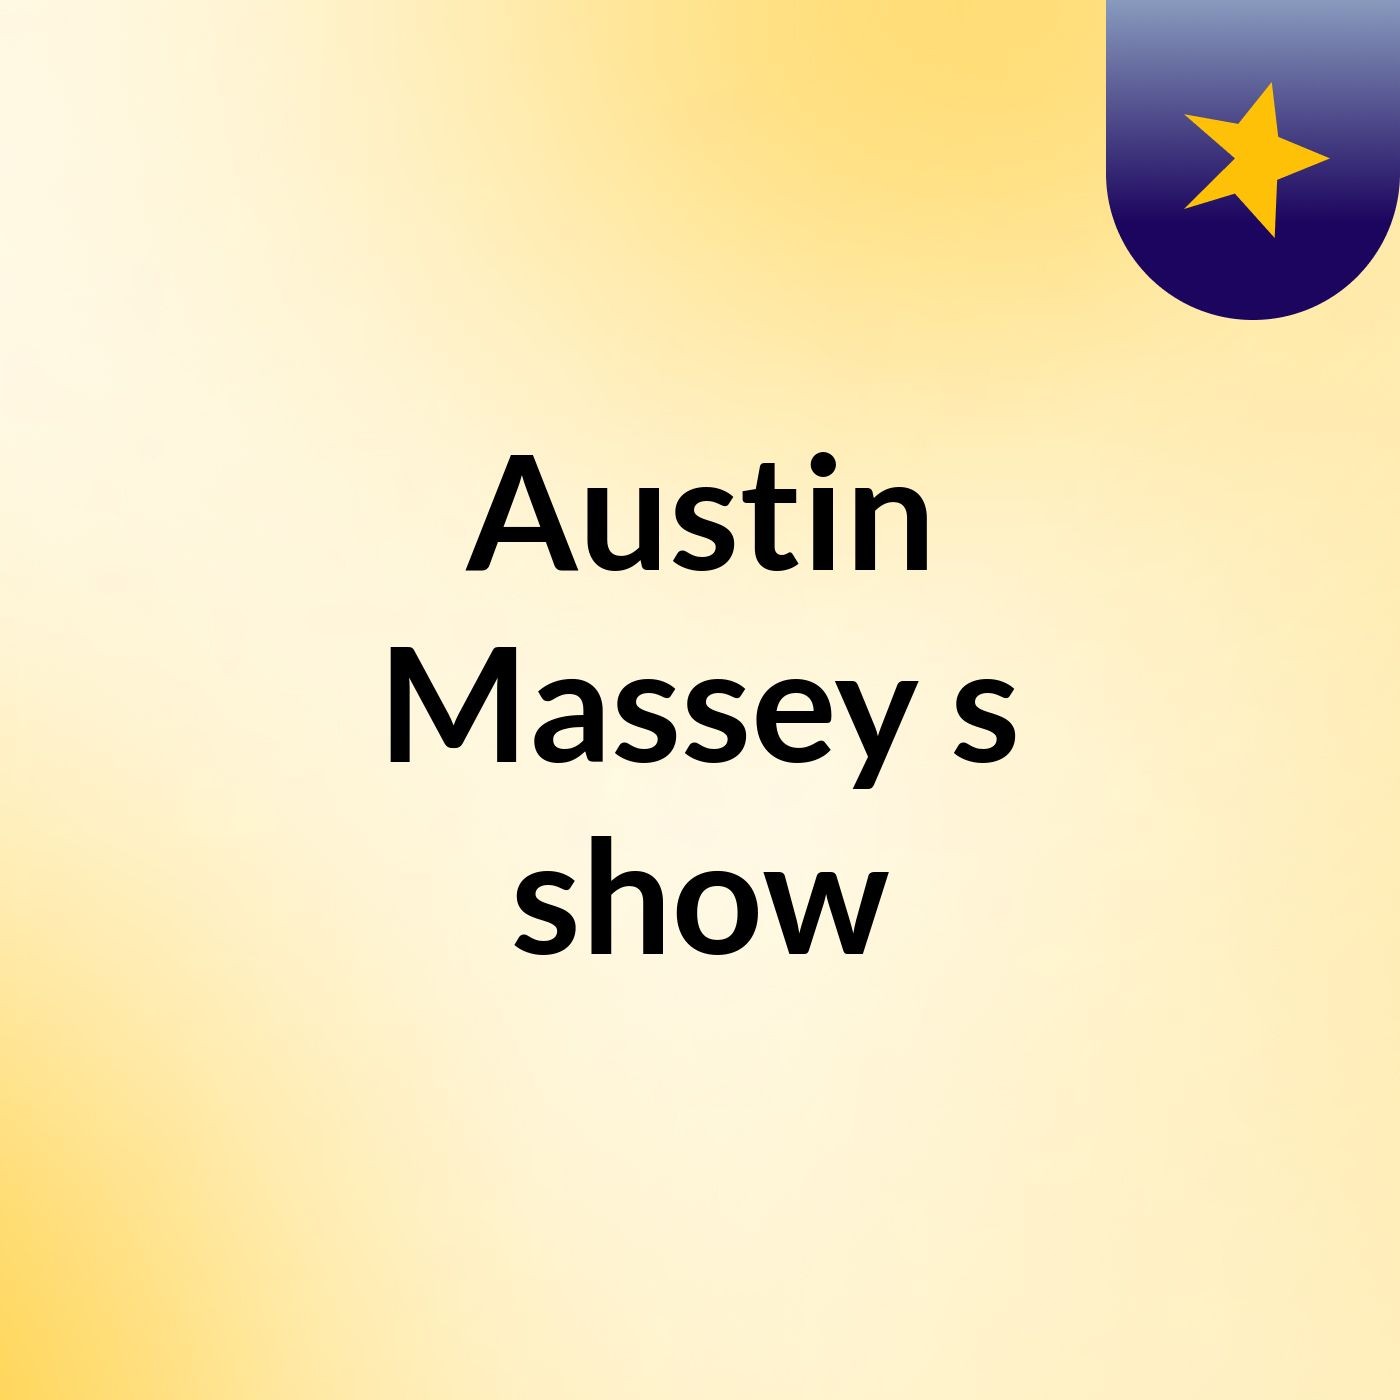 Austin Massey's show